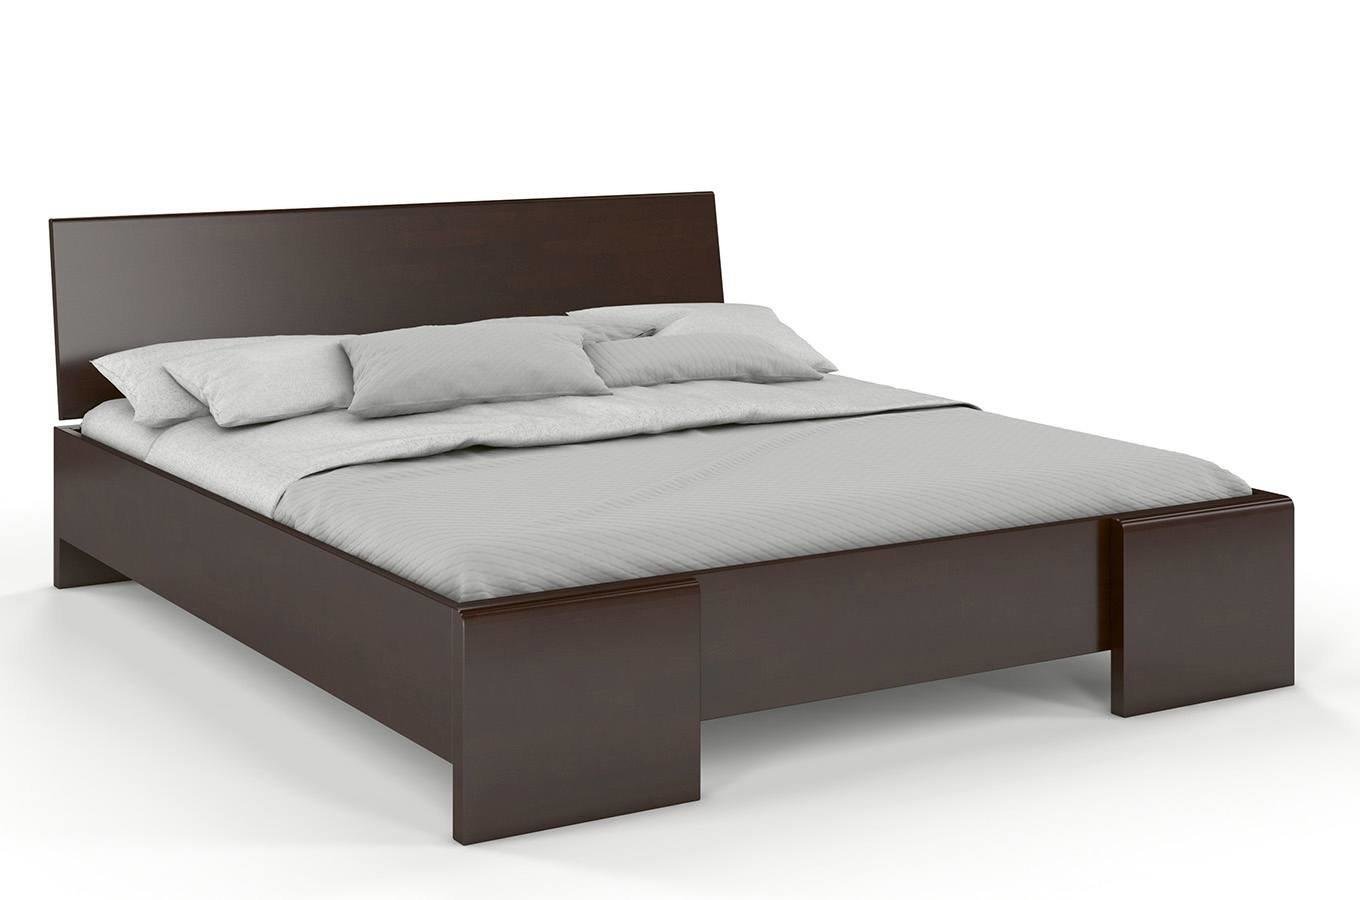 Łóżko drewniane bukowe Visby HESSLER High & LONG (długość + 20 cm) / 160x220 cm, kolor palisander